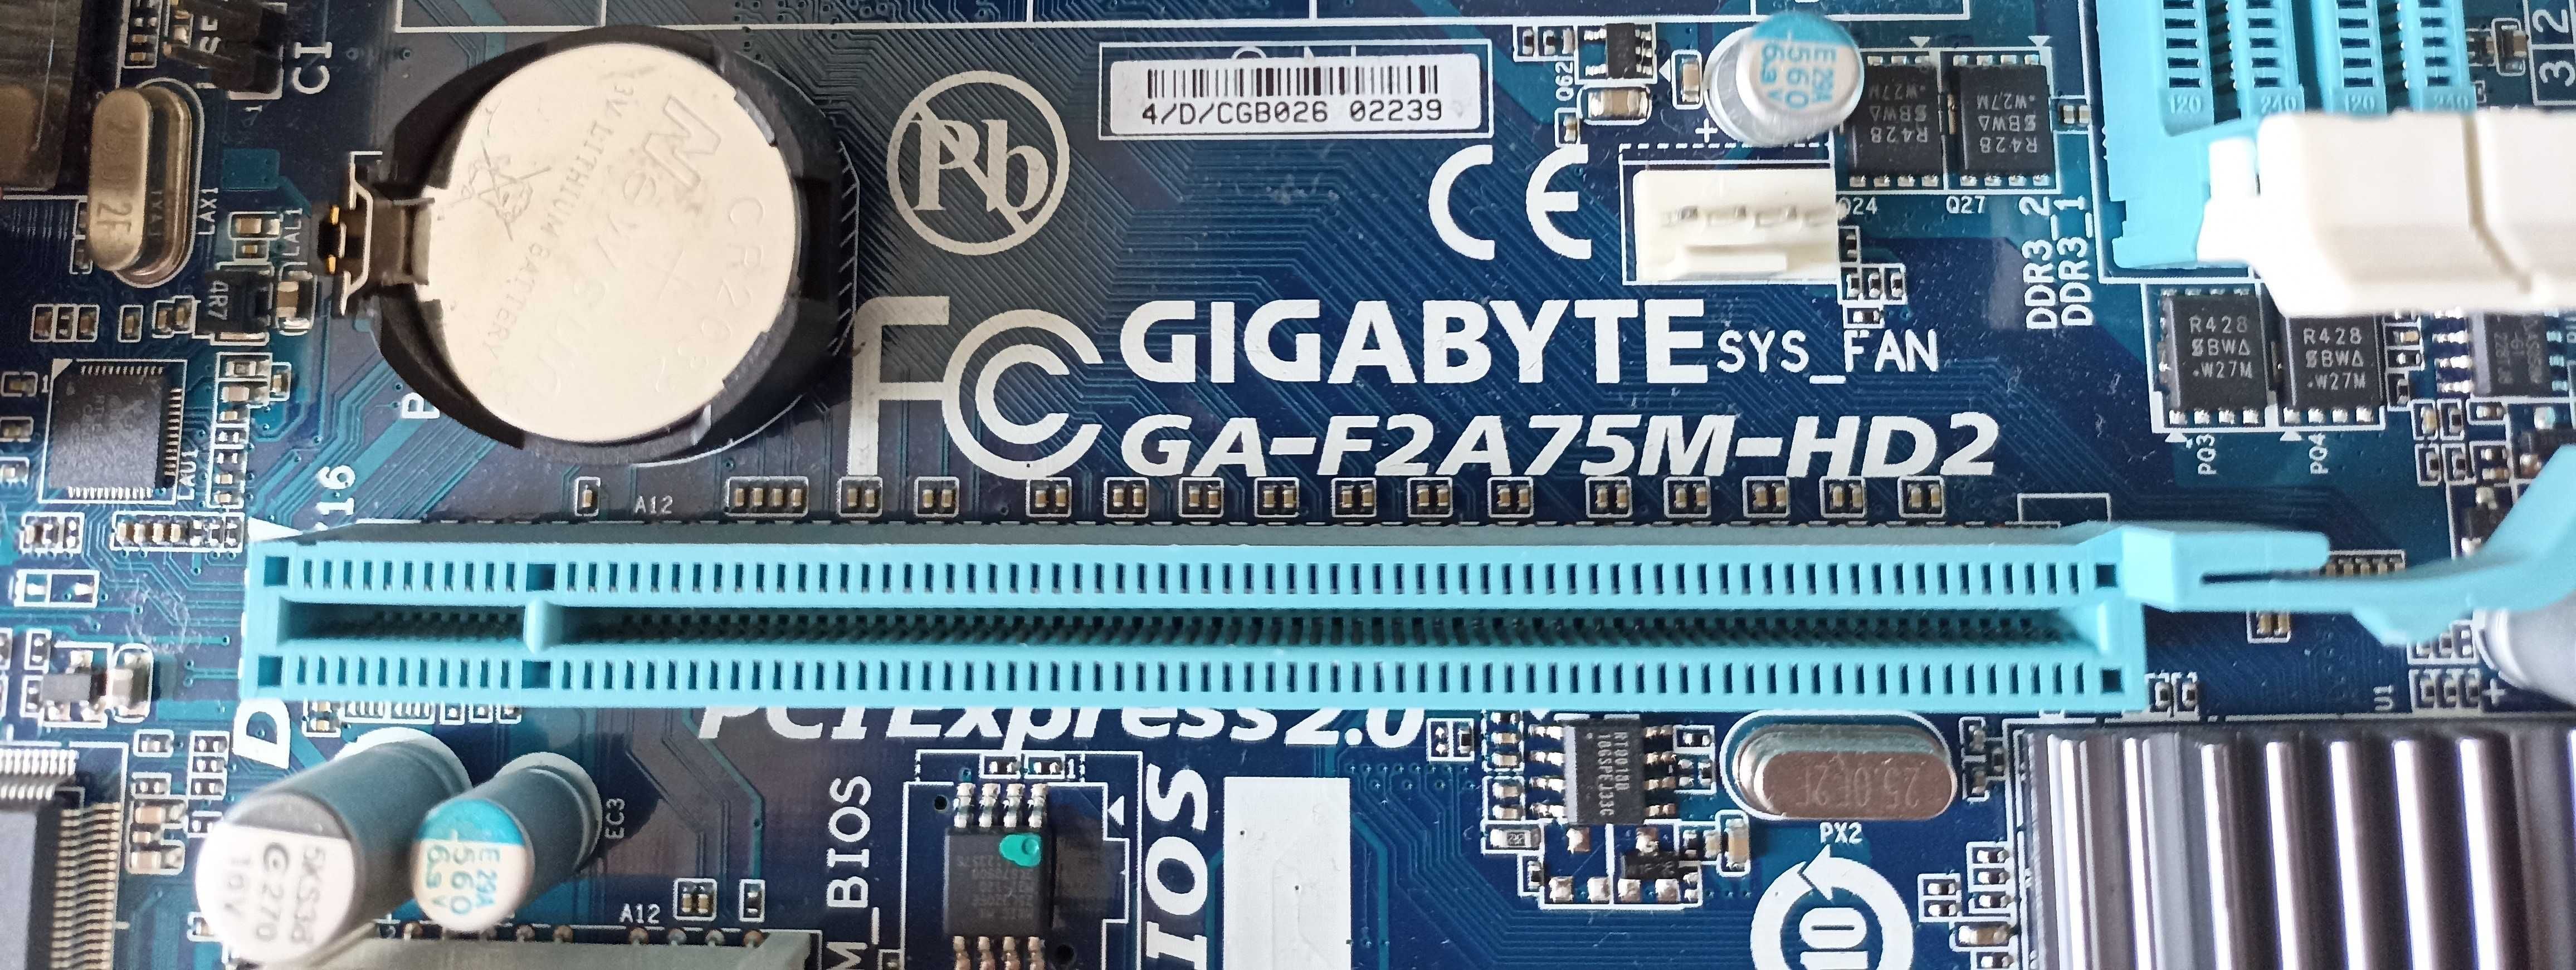 Płyta główna Gigabyte GA-F2A75M-HD2 +AMD A6-5400K 3,6 GHz